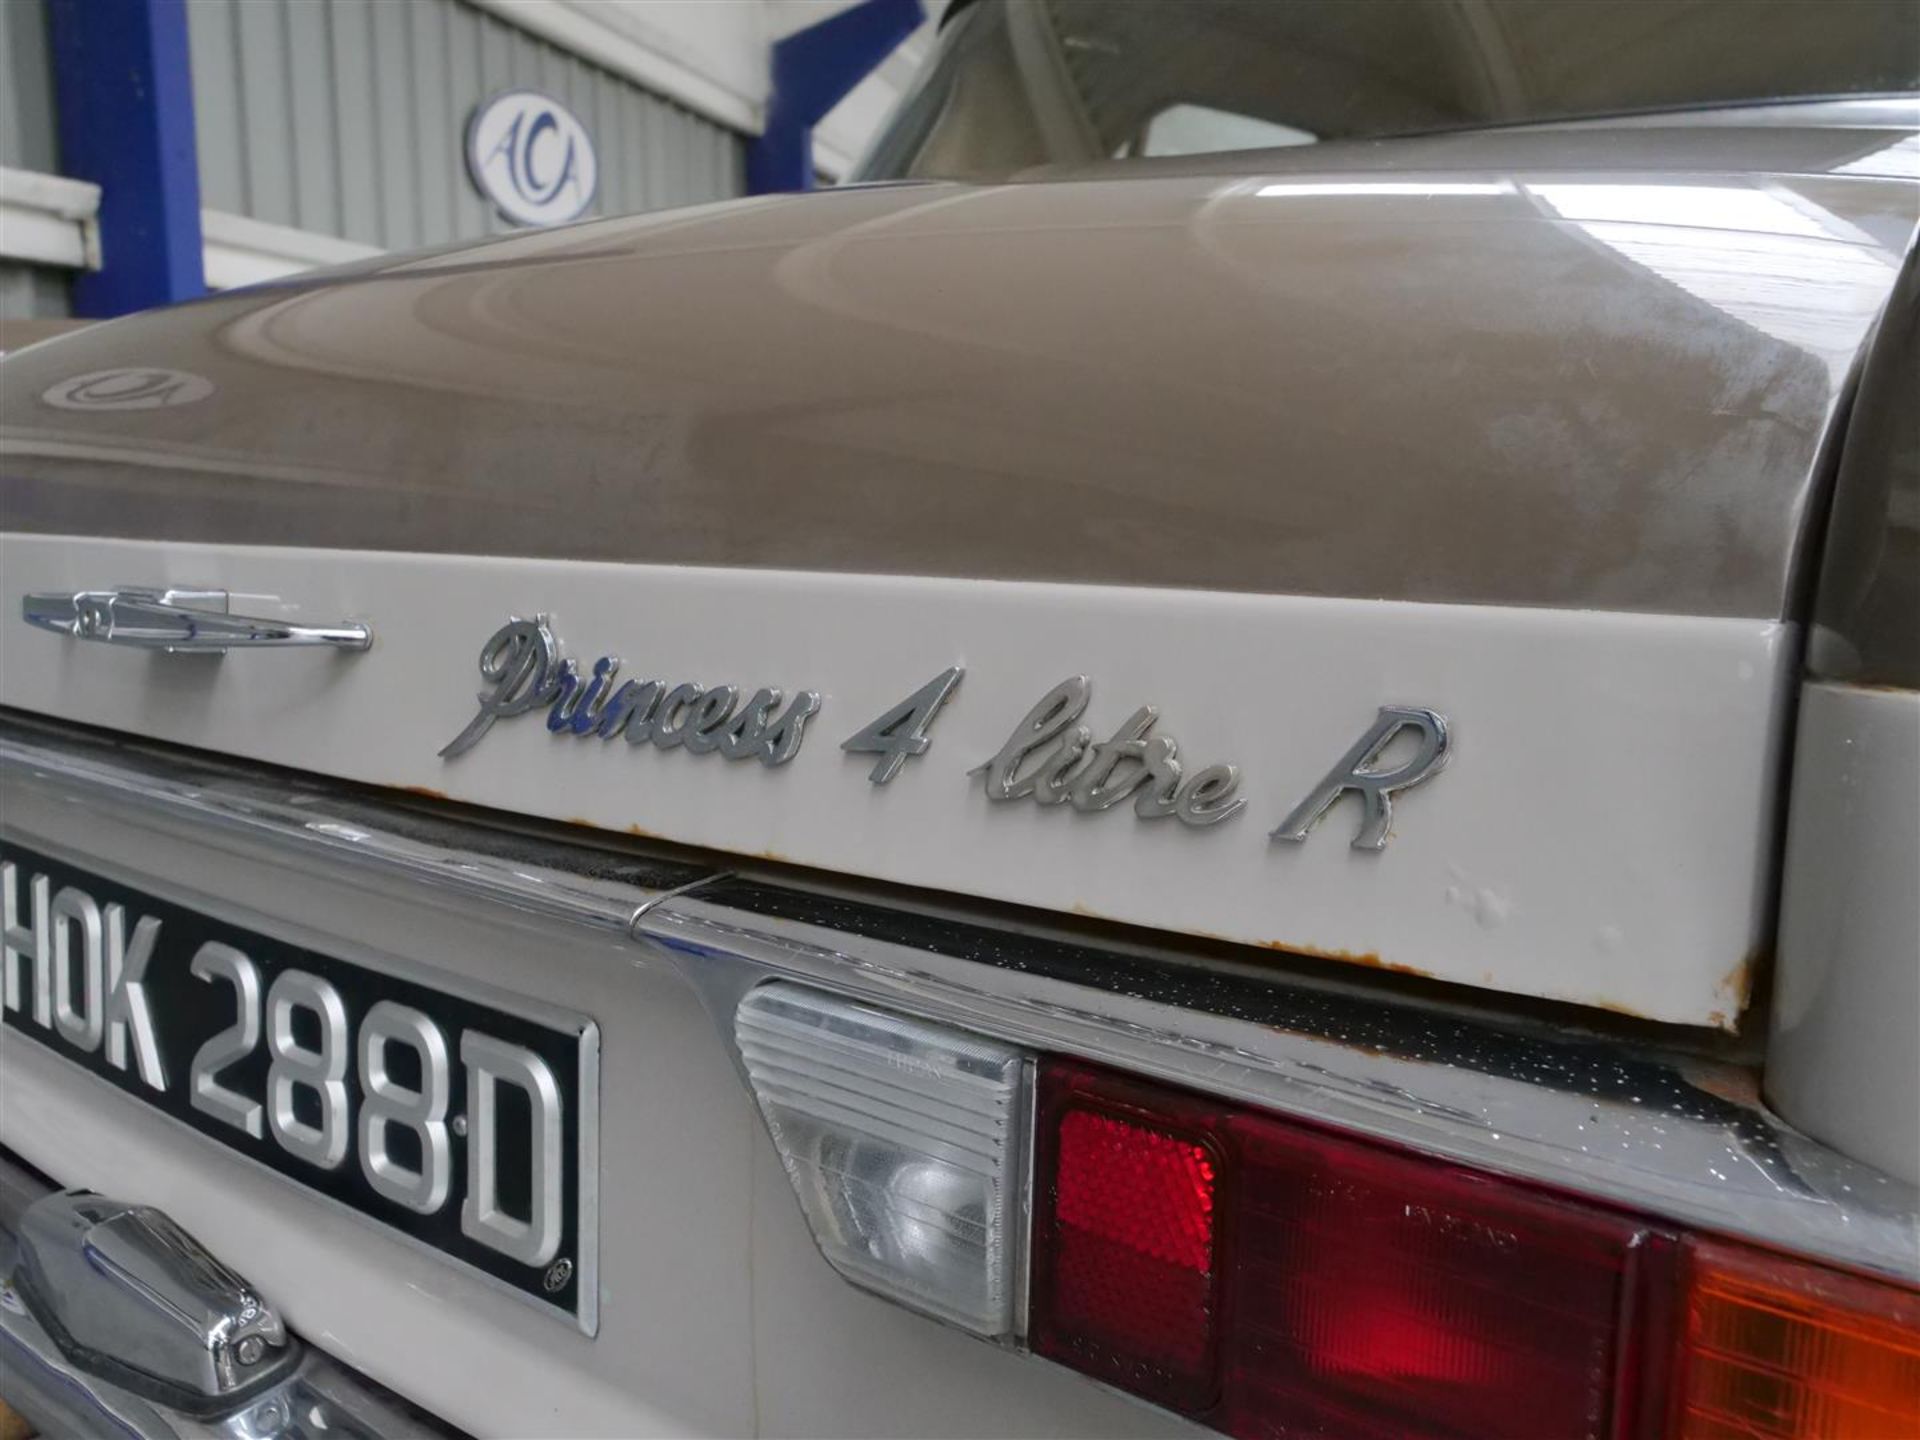 1966 Vanden Plas Princess 4 litre R Auto - Image 44 of 44